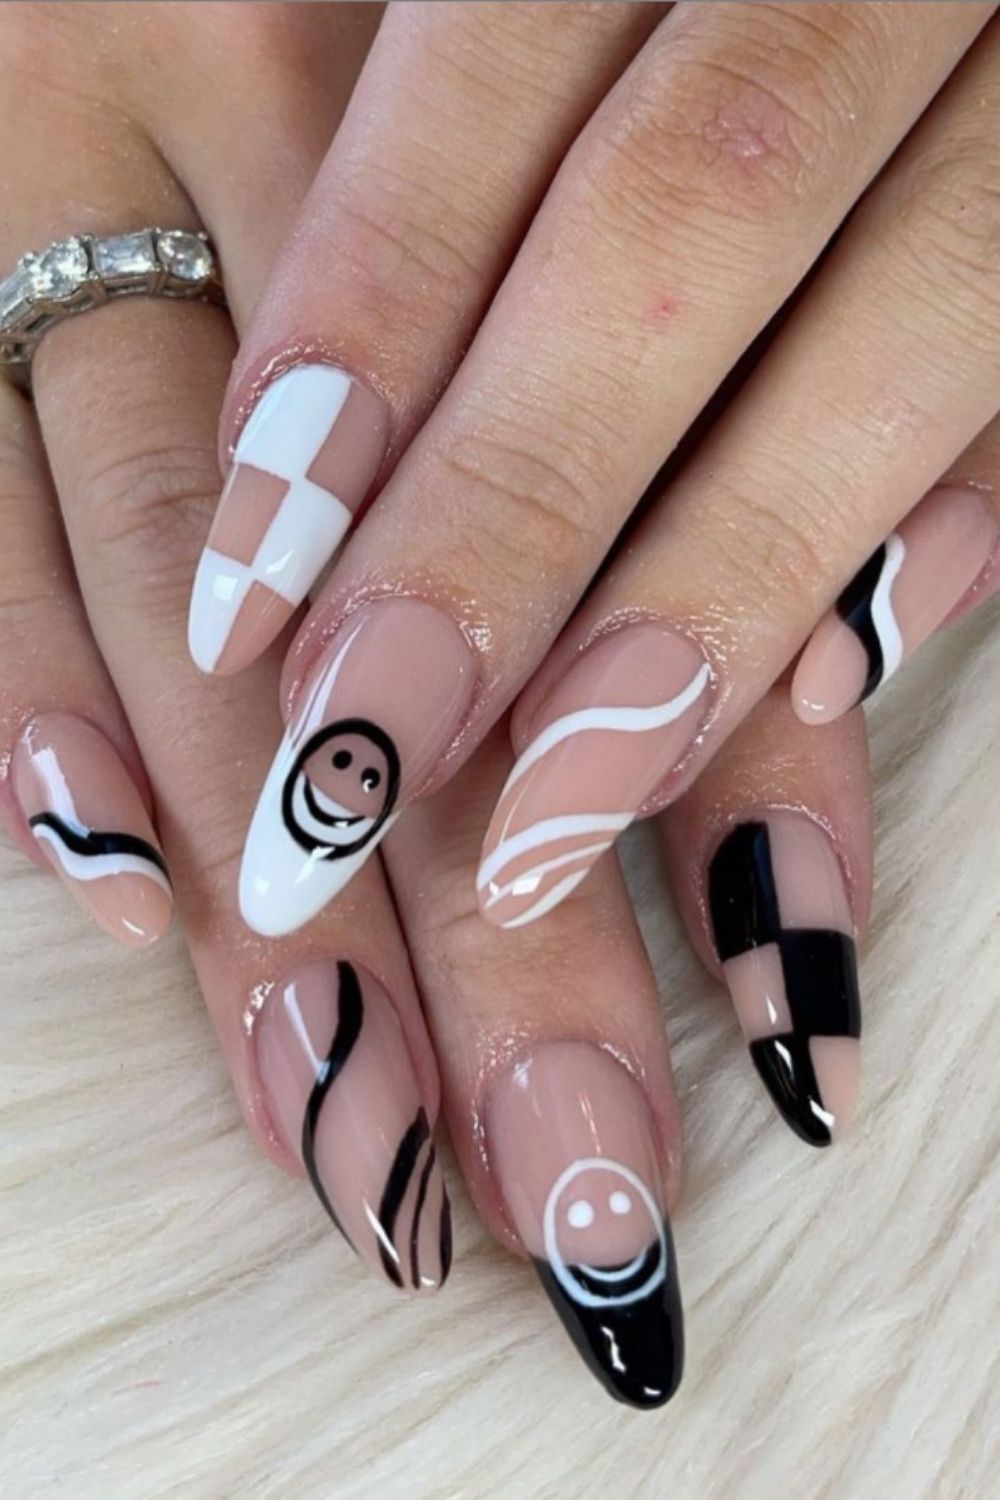 white and black almond nails art